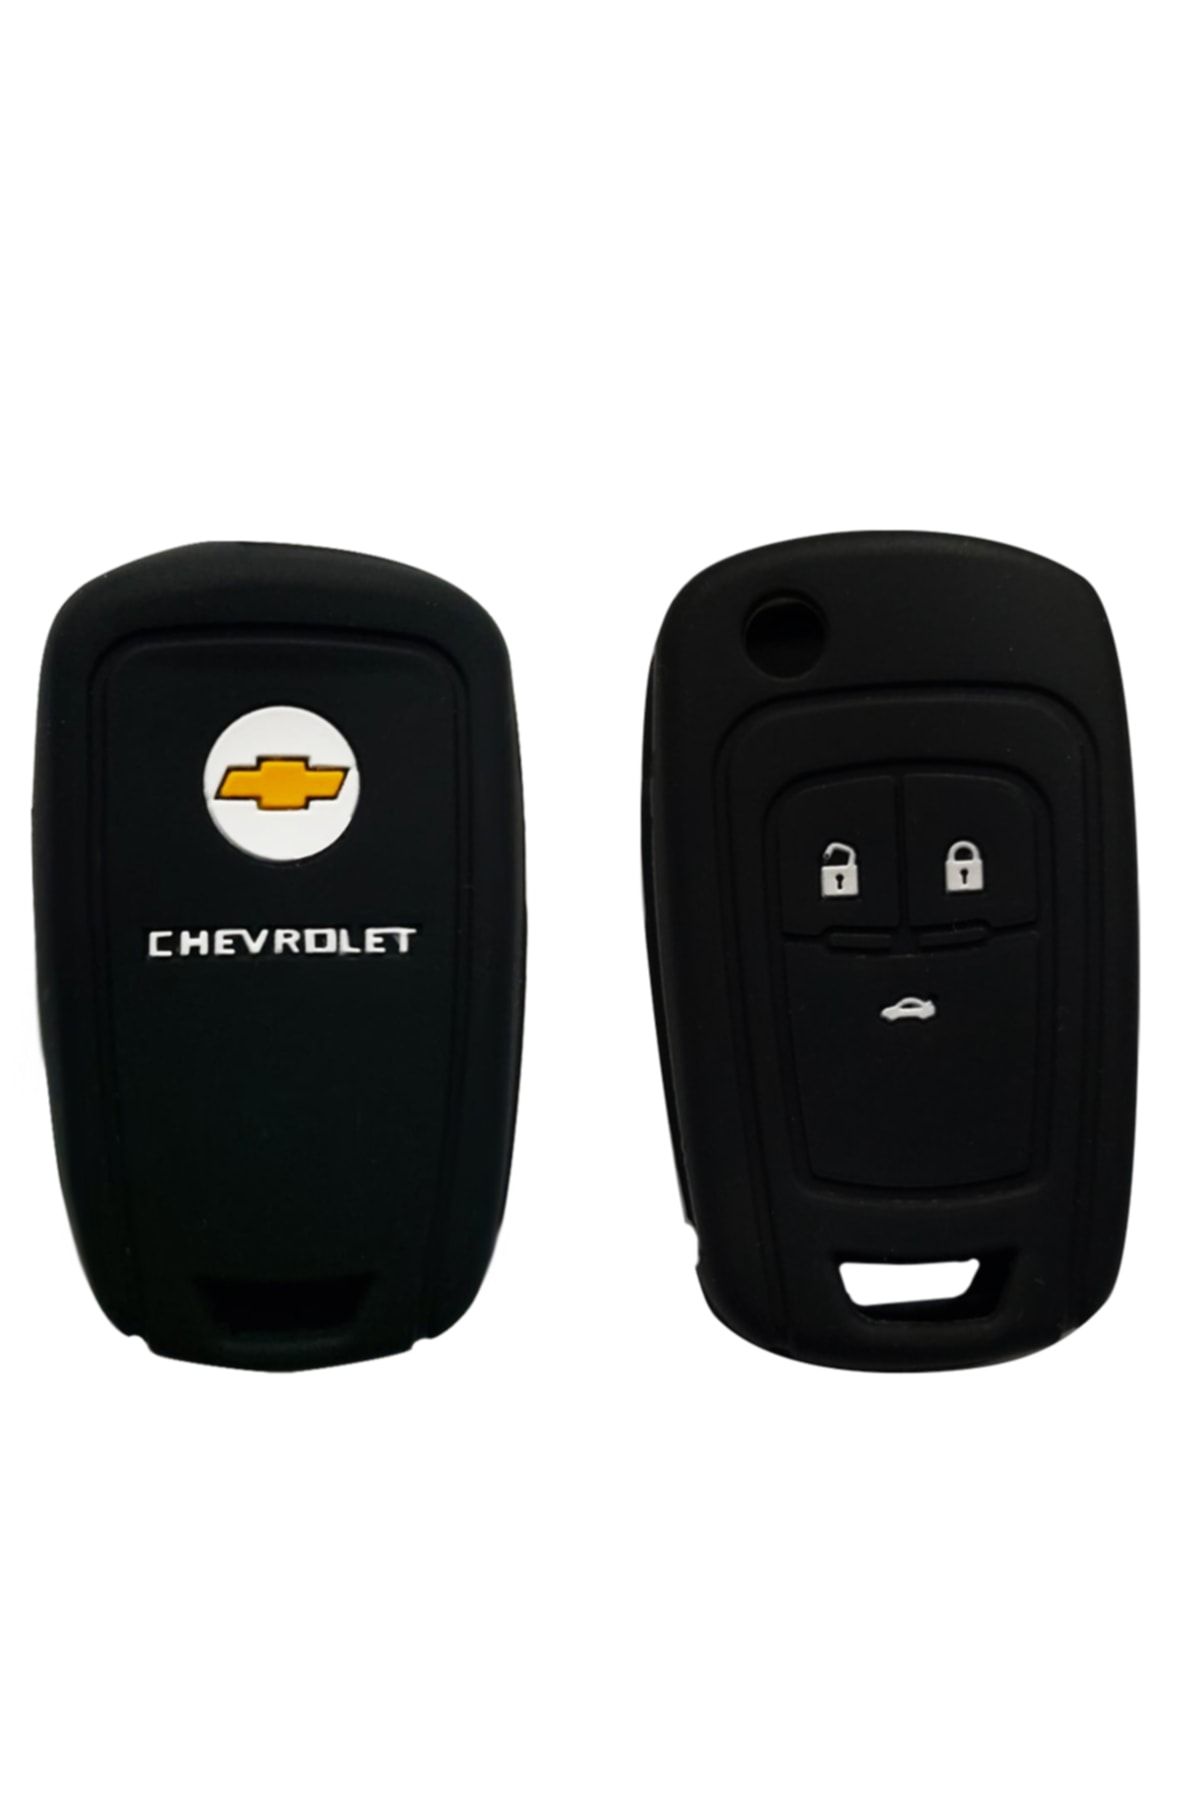 C9 Chevrolet Cruze Captiva Aveo Spark Silikon Anahtar Kılıfı 1.kalit